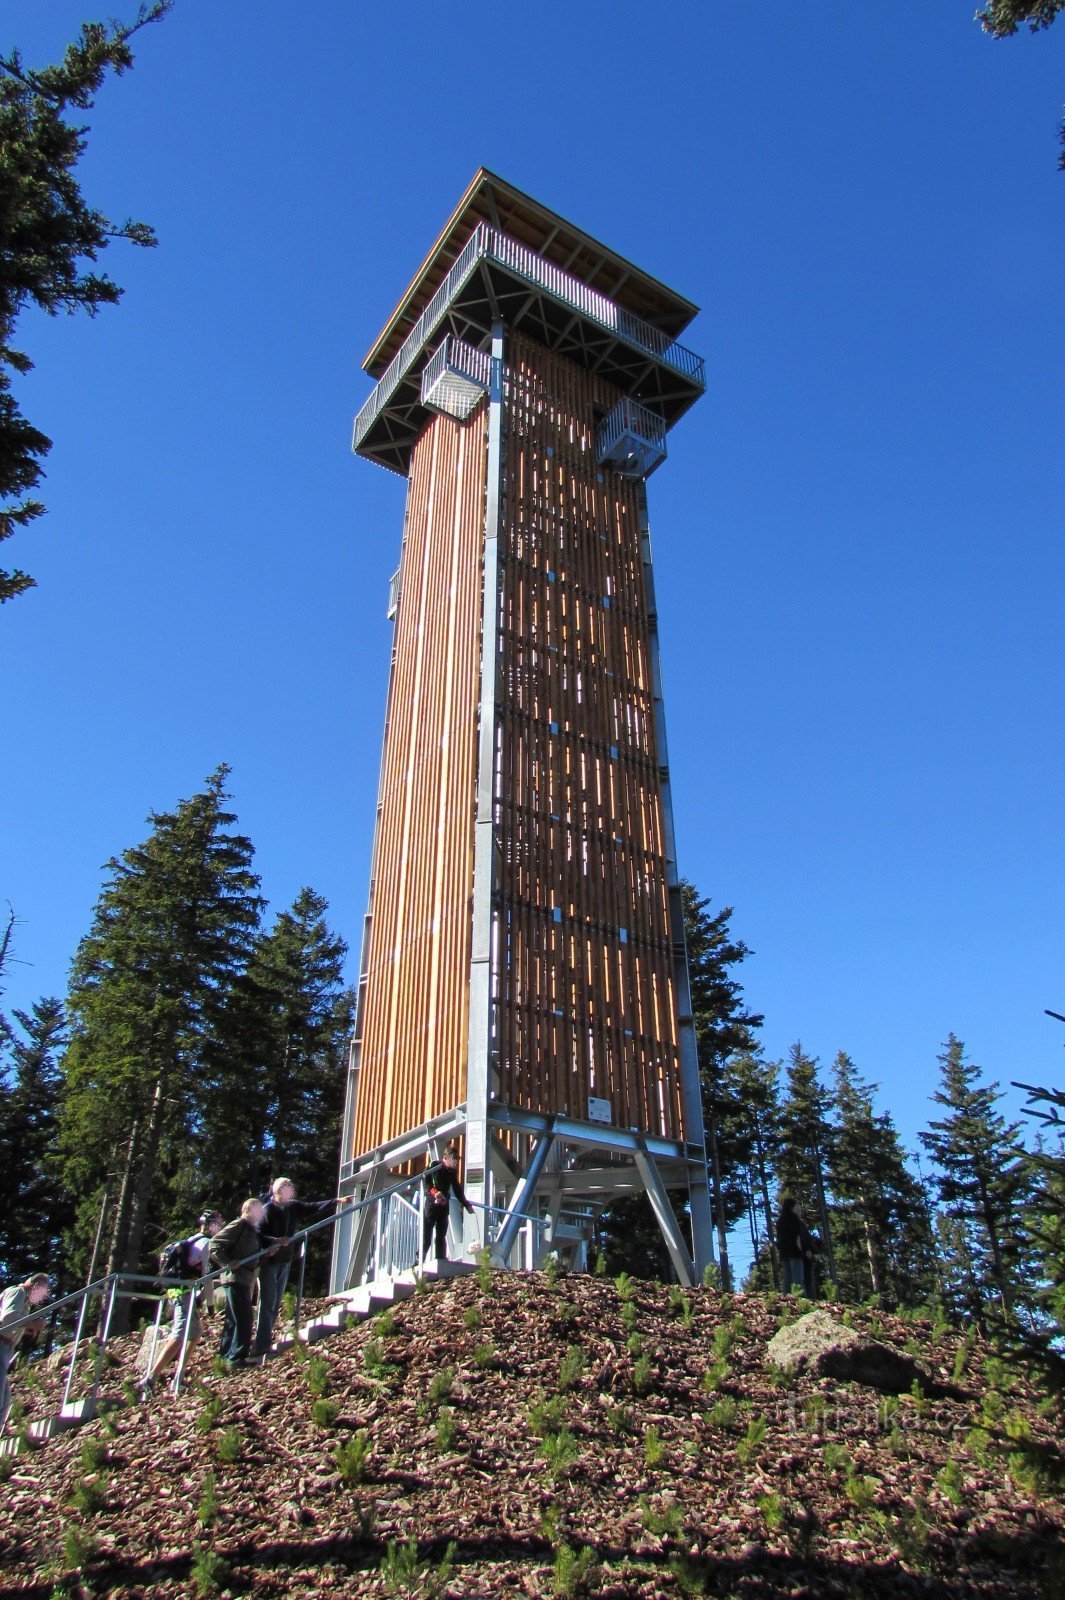 Spičák observation tower